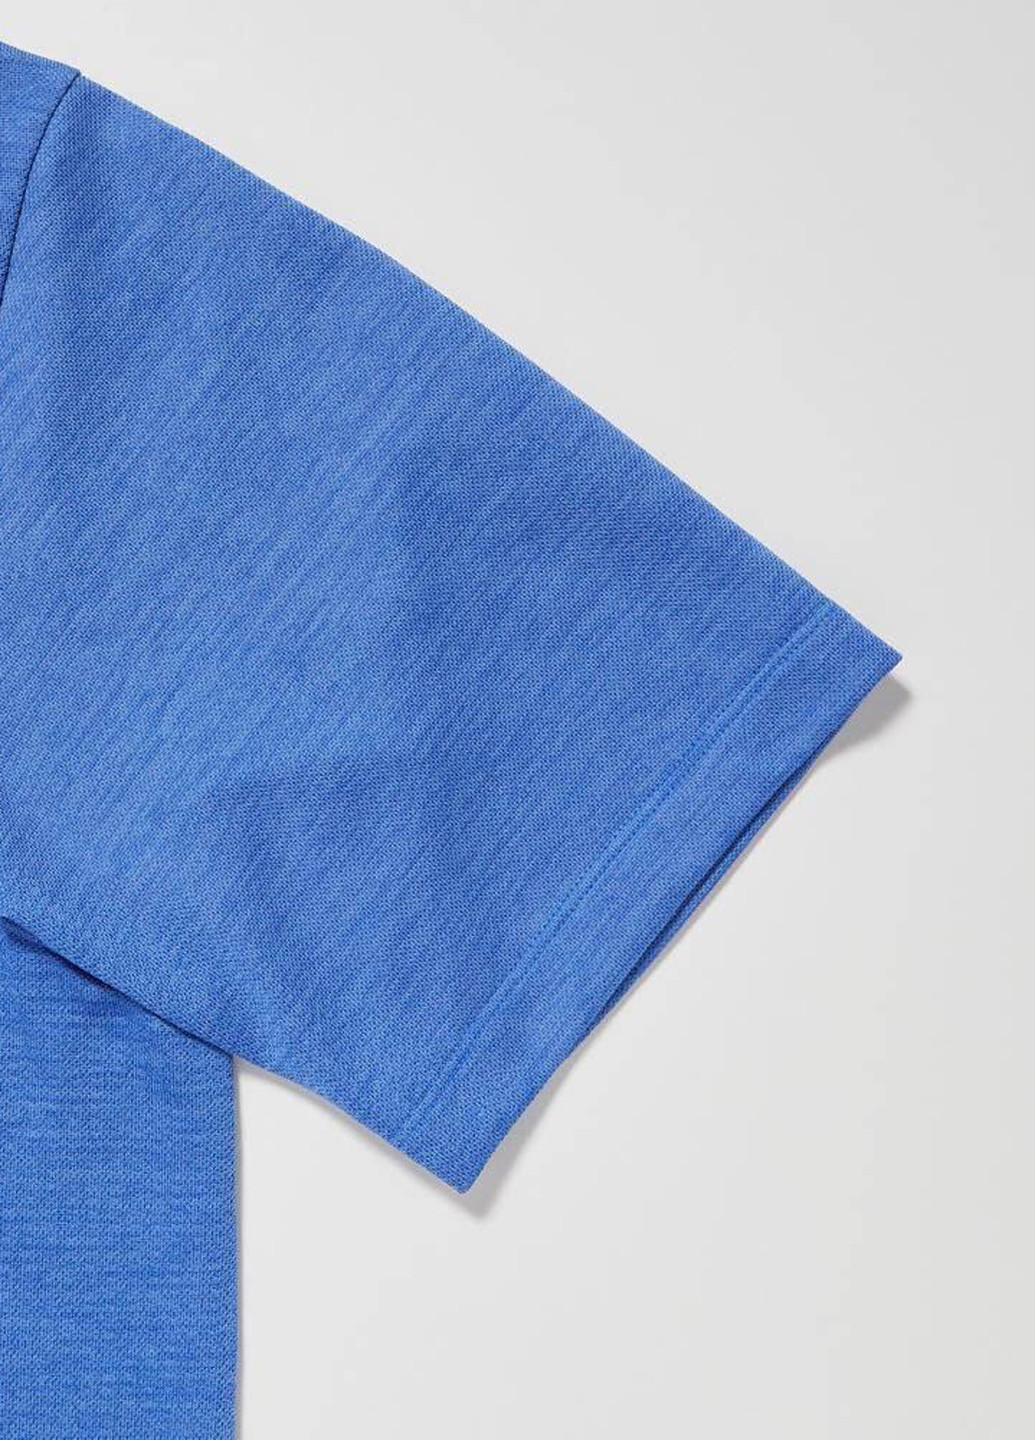 Голубой футболка-поло для мужчин Uniqlo однотонная